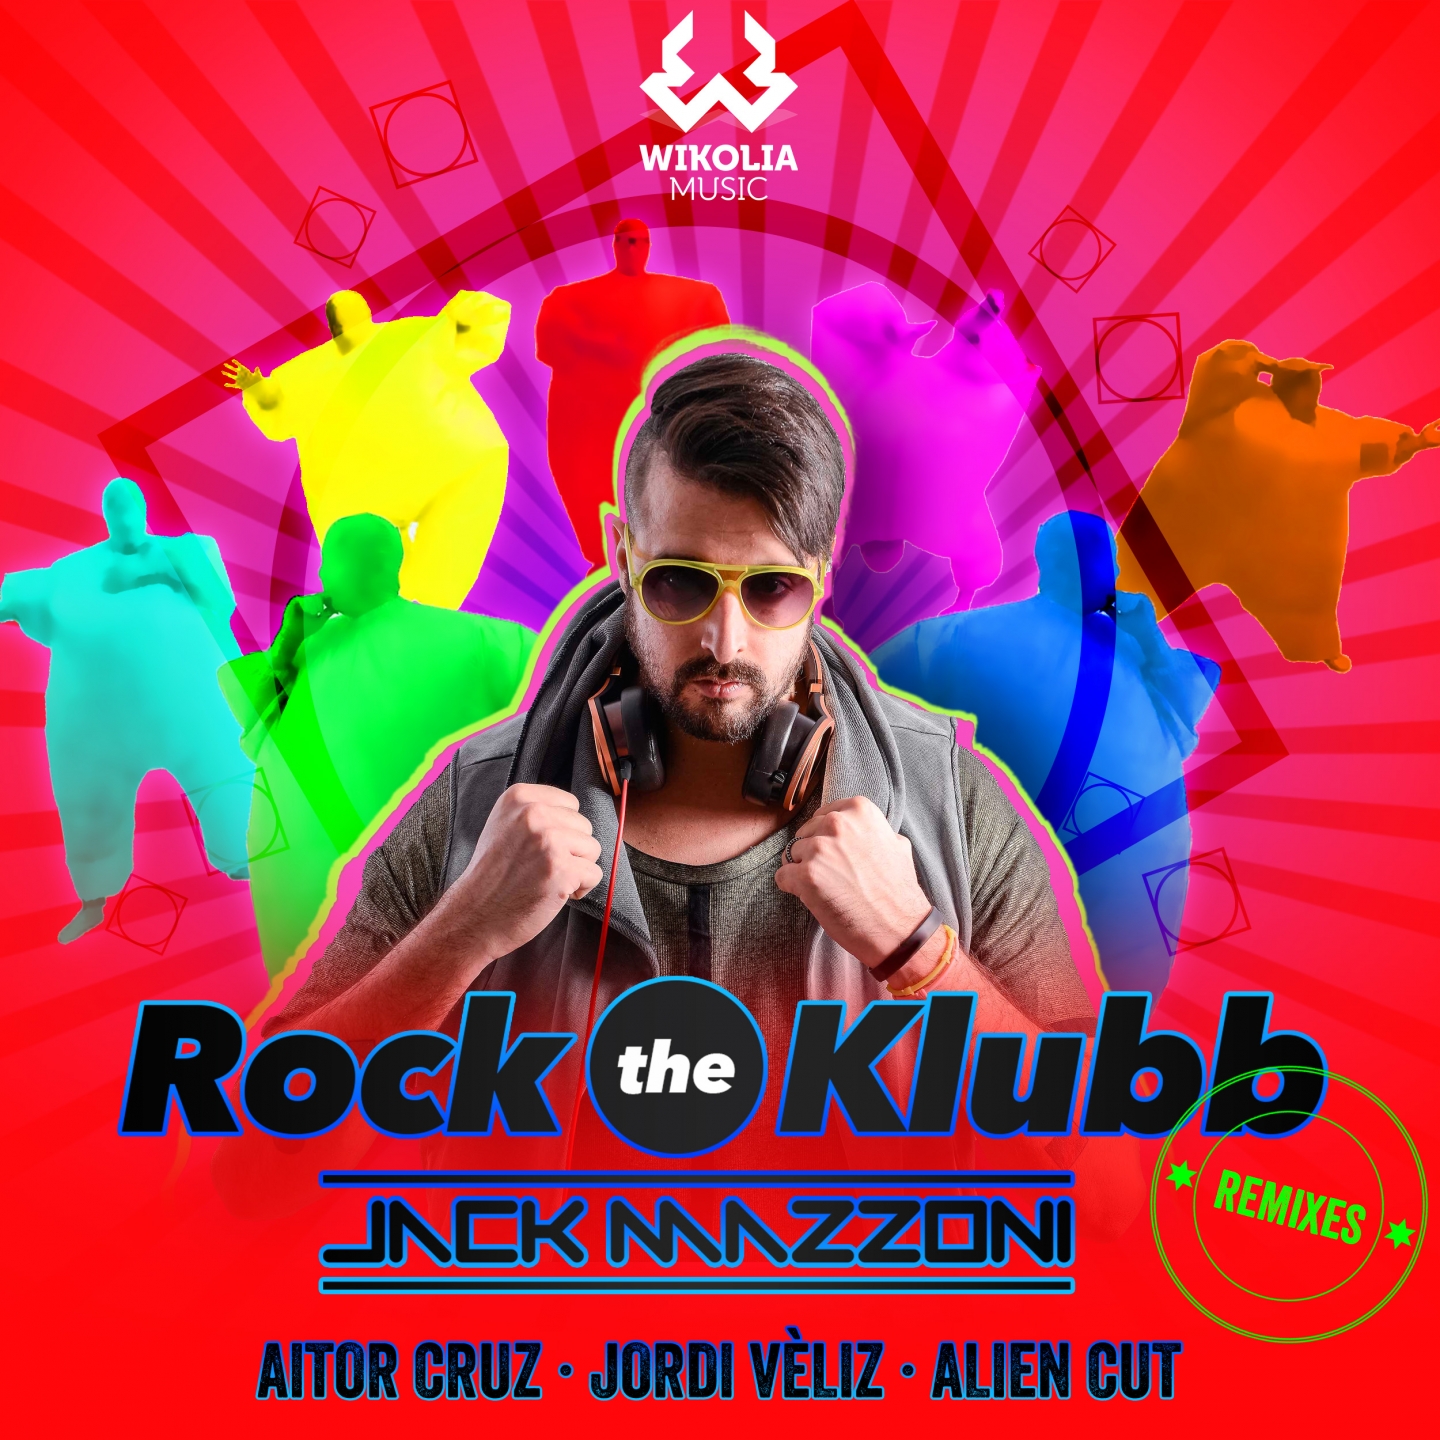 Rock the Klubb Jordi Ve liz Remix Extended